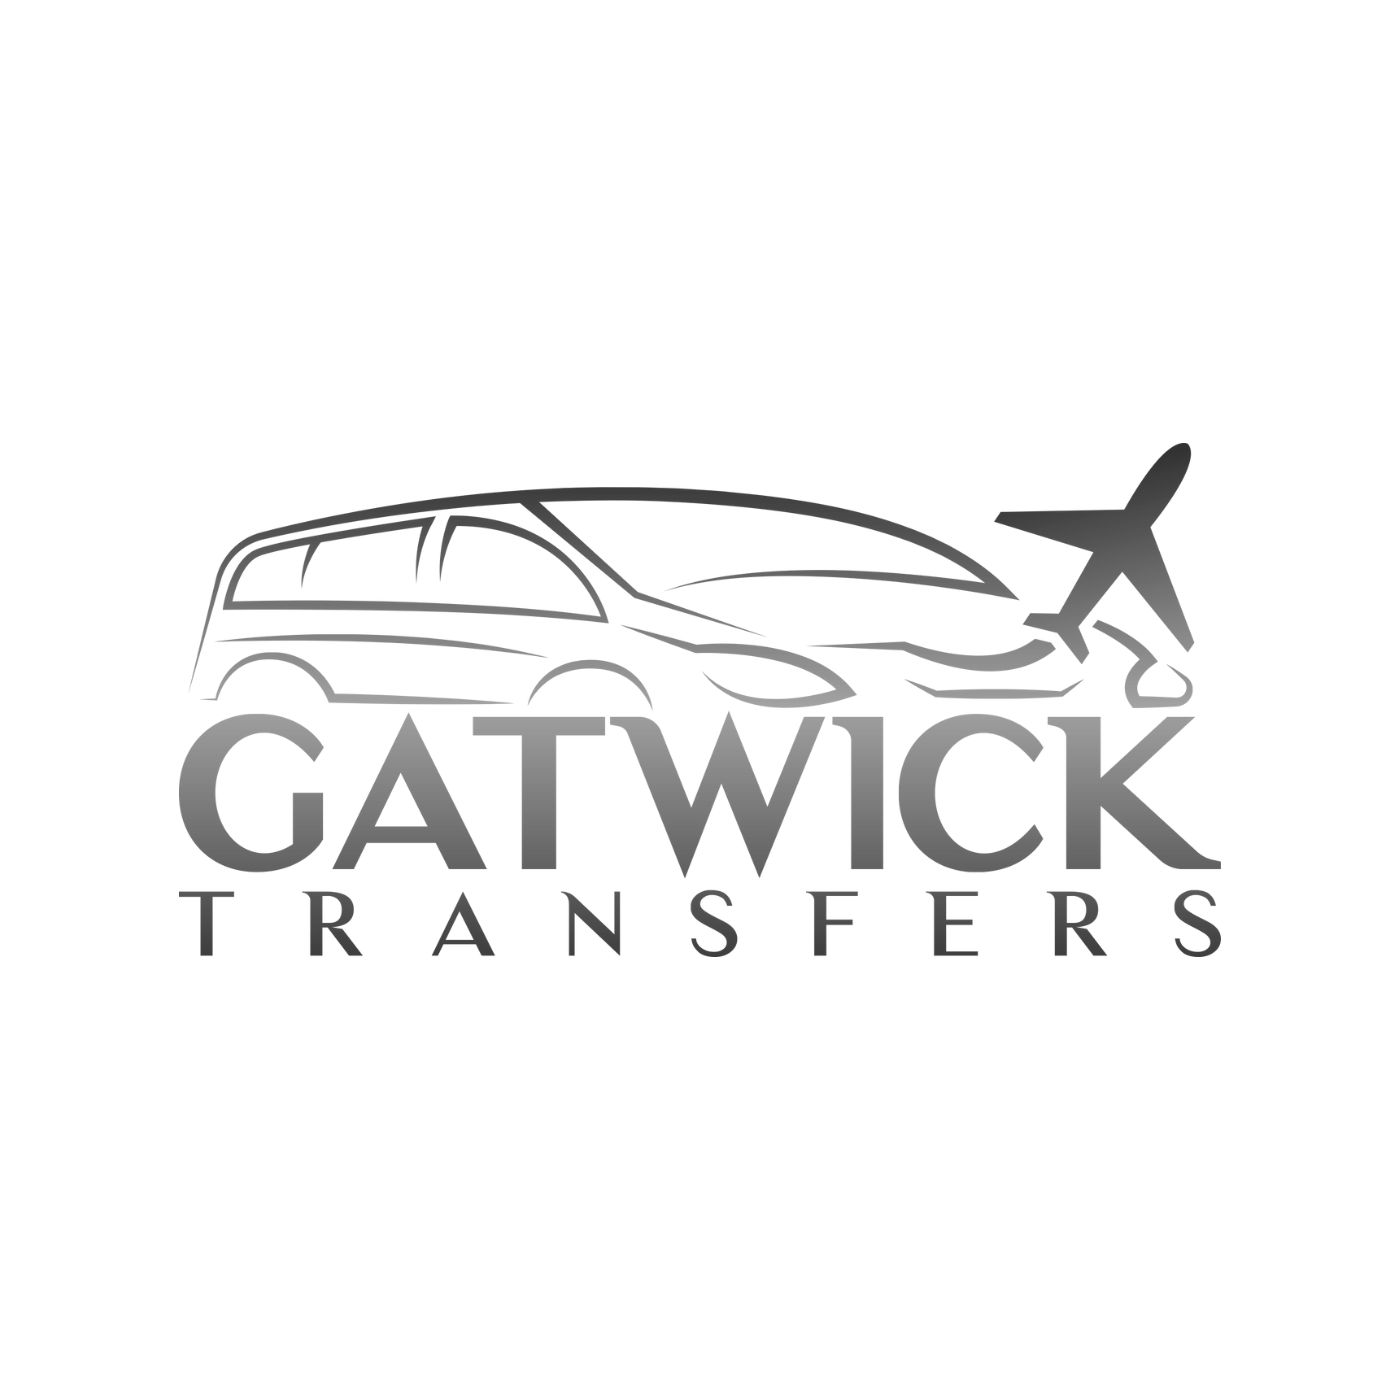 Gatwick 1 Transfers